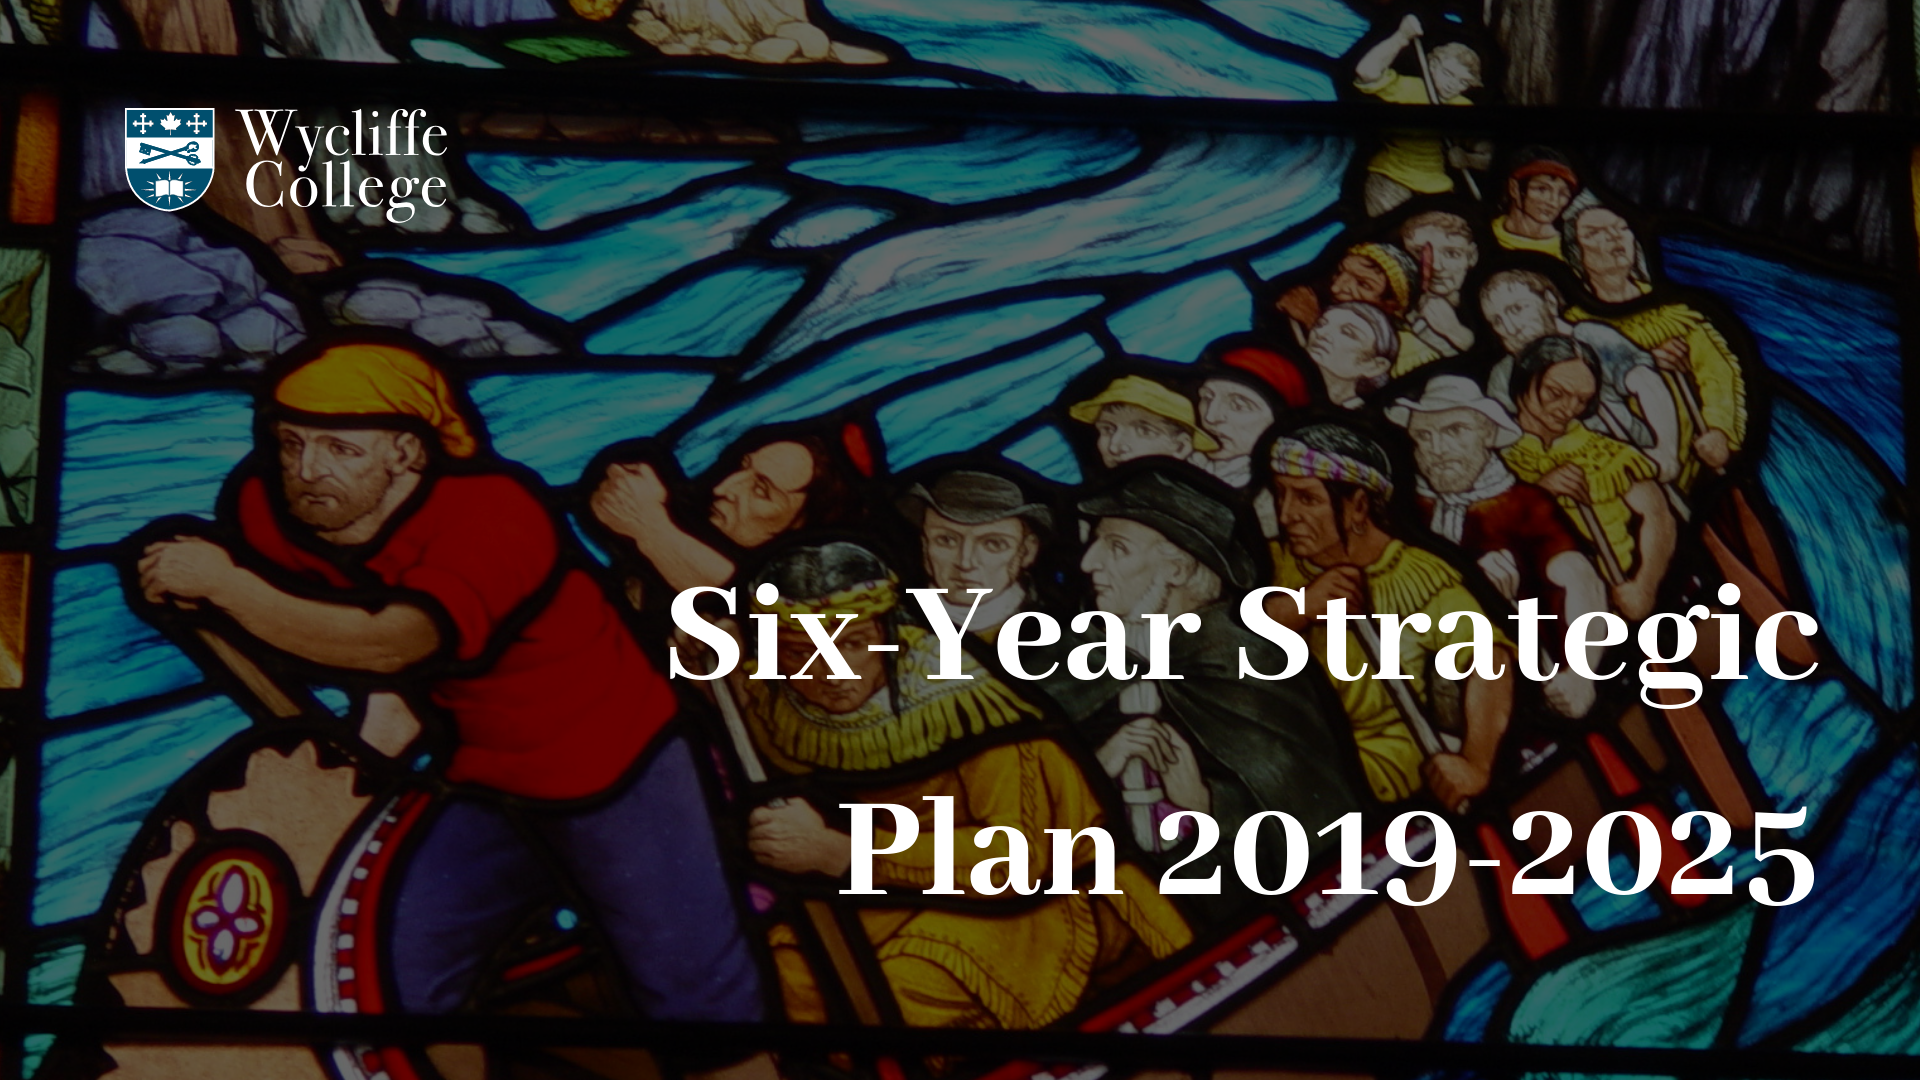 Wycliffe College Six-Year Strategic Plan 2019-2025